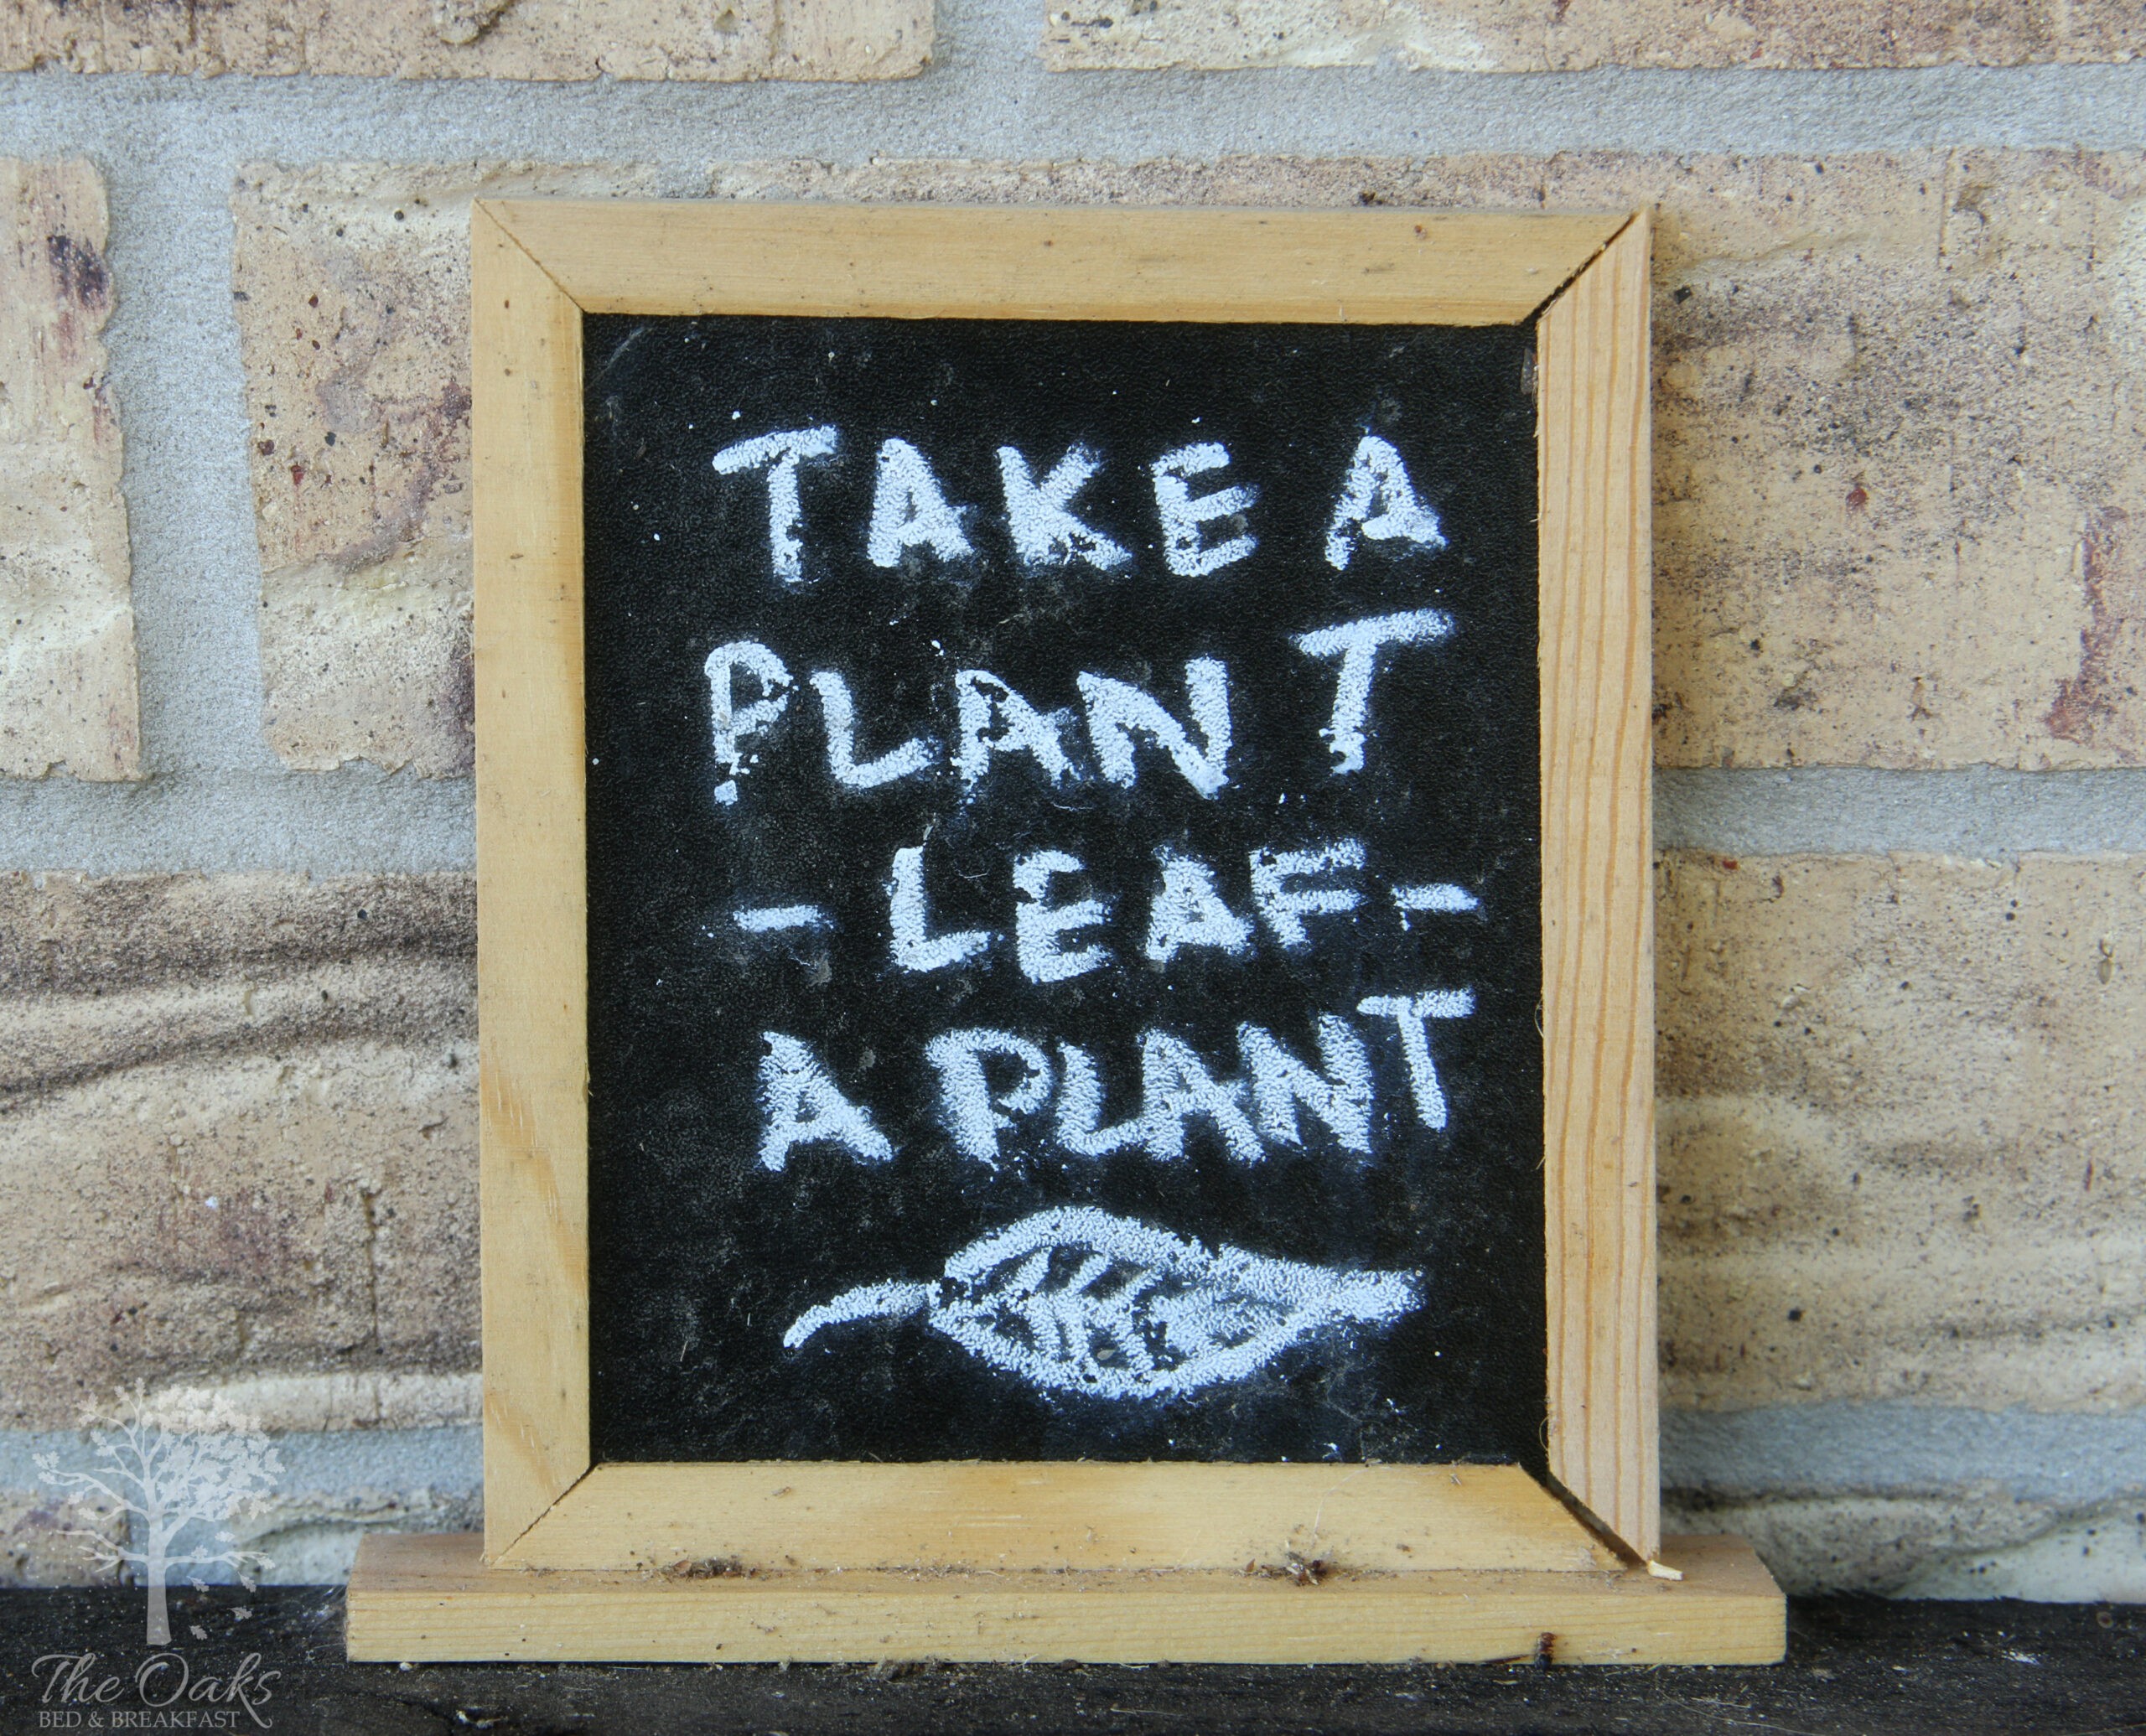 Sulphur Springs’ “take a plant, leaf a plant” installation